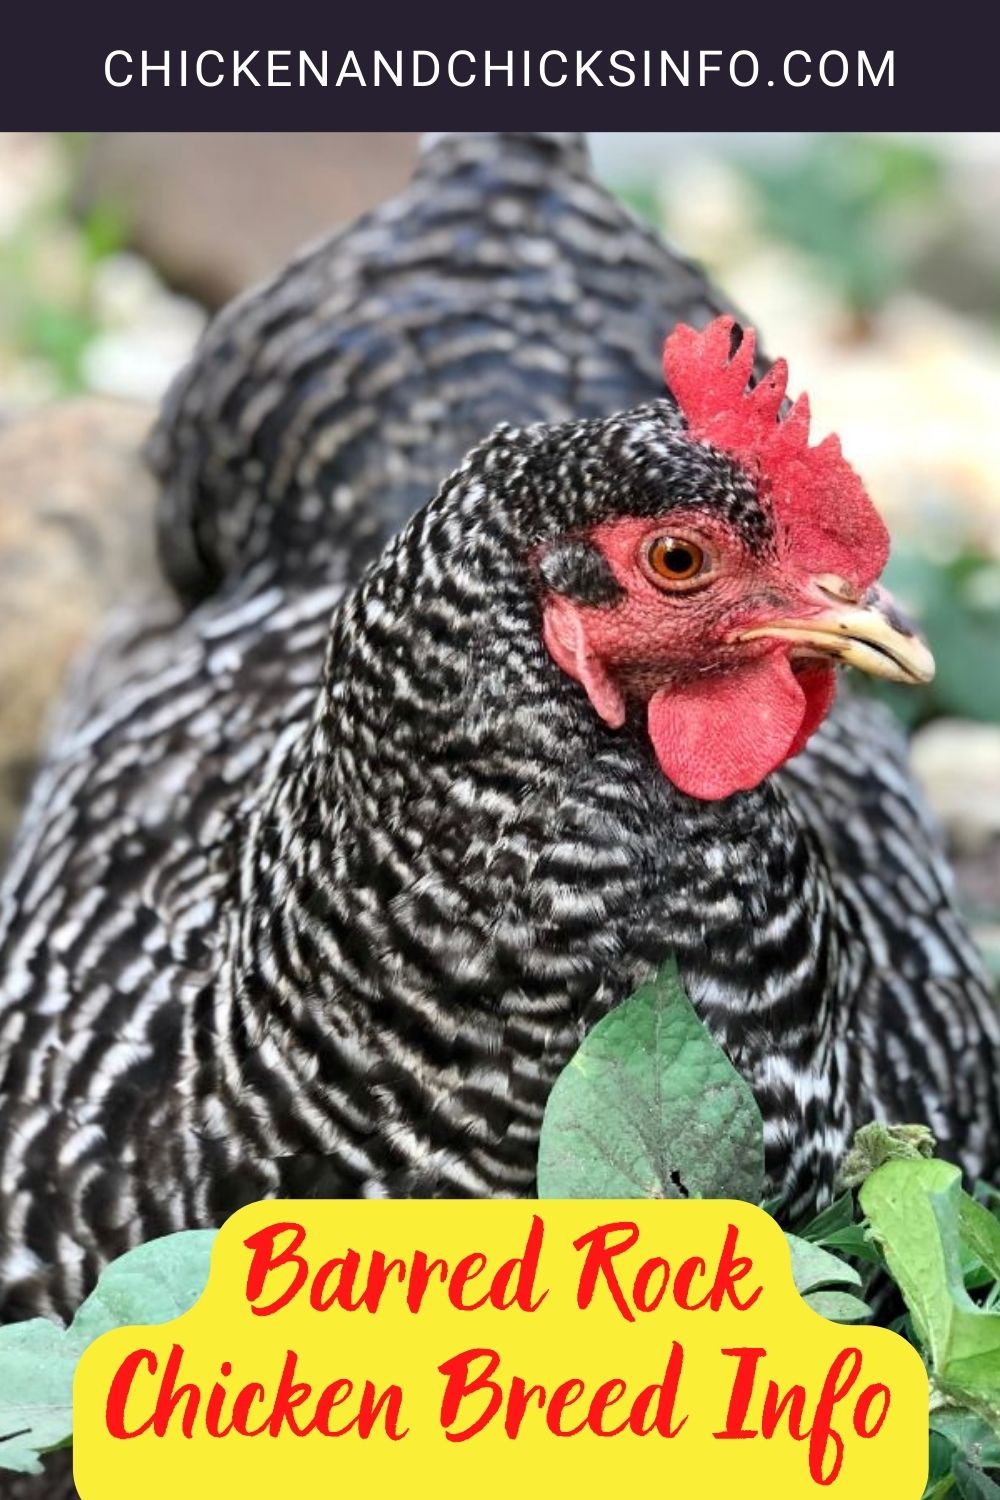 Barred Rock Chicken Breed Info Pinterest image.